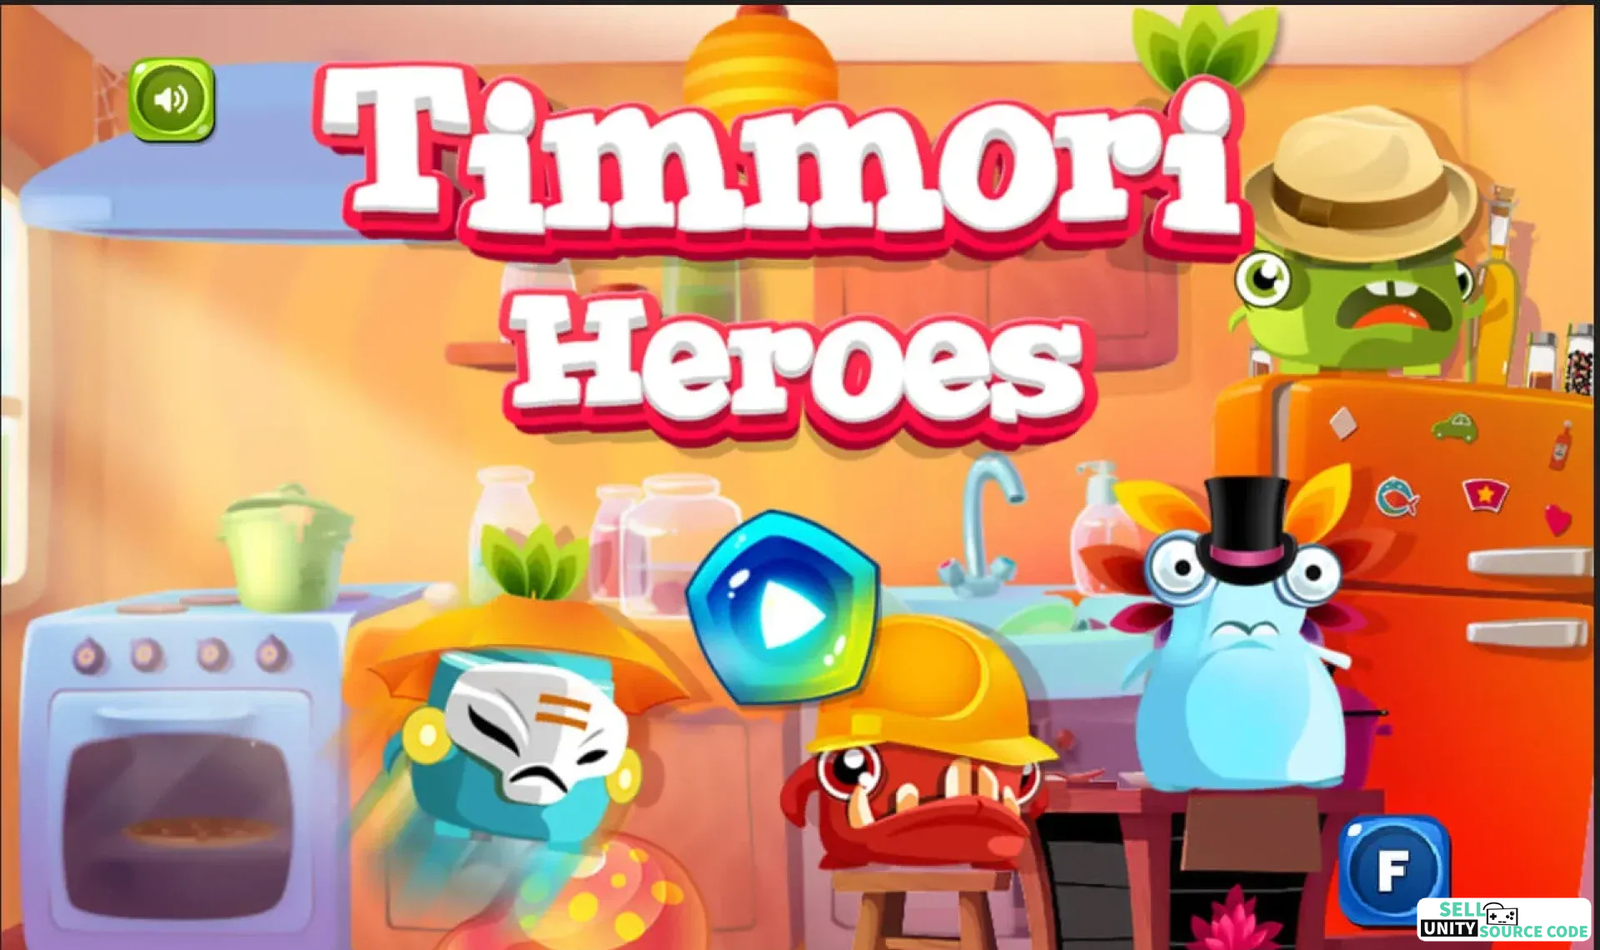 Timmori Heroes